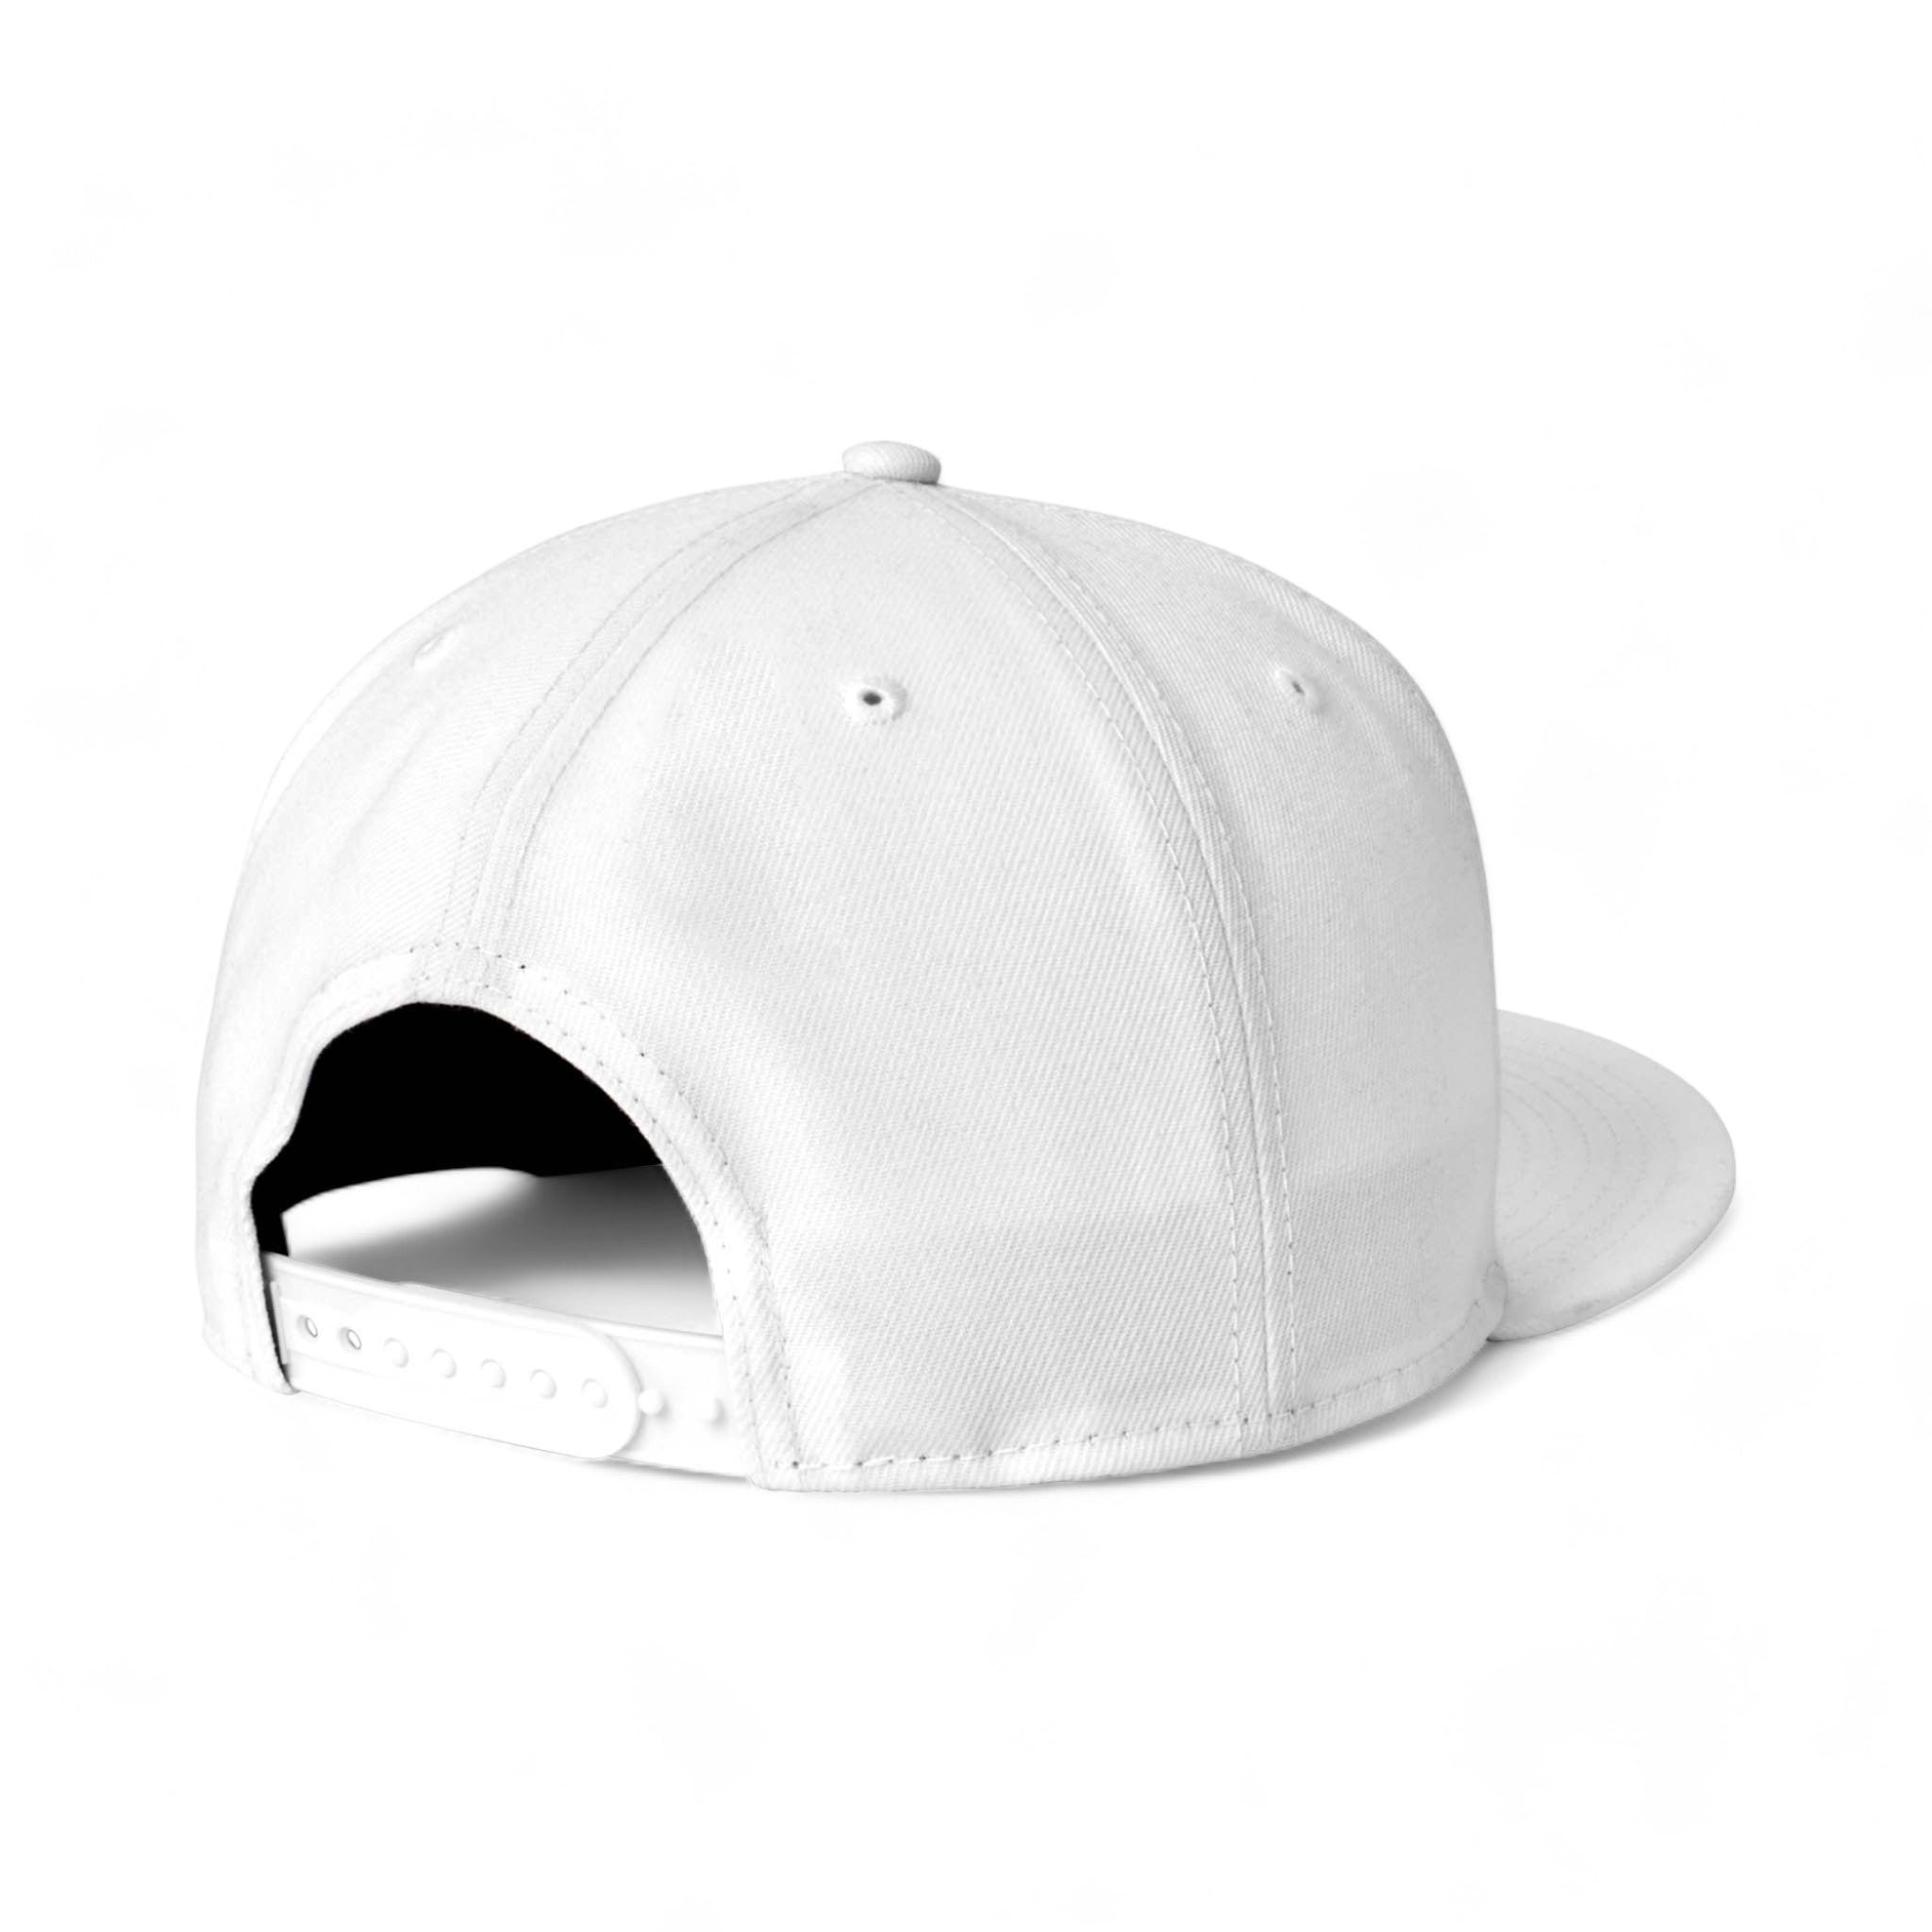 Back view of New Era NE4020 custom hat in white